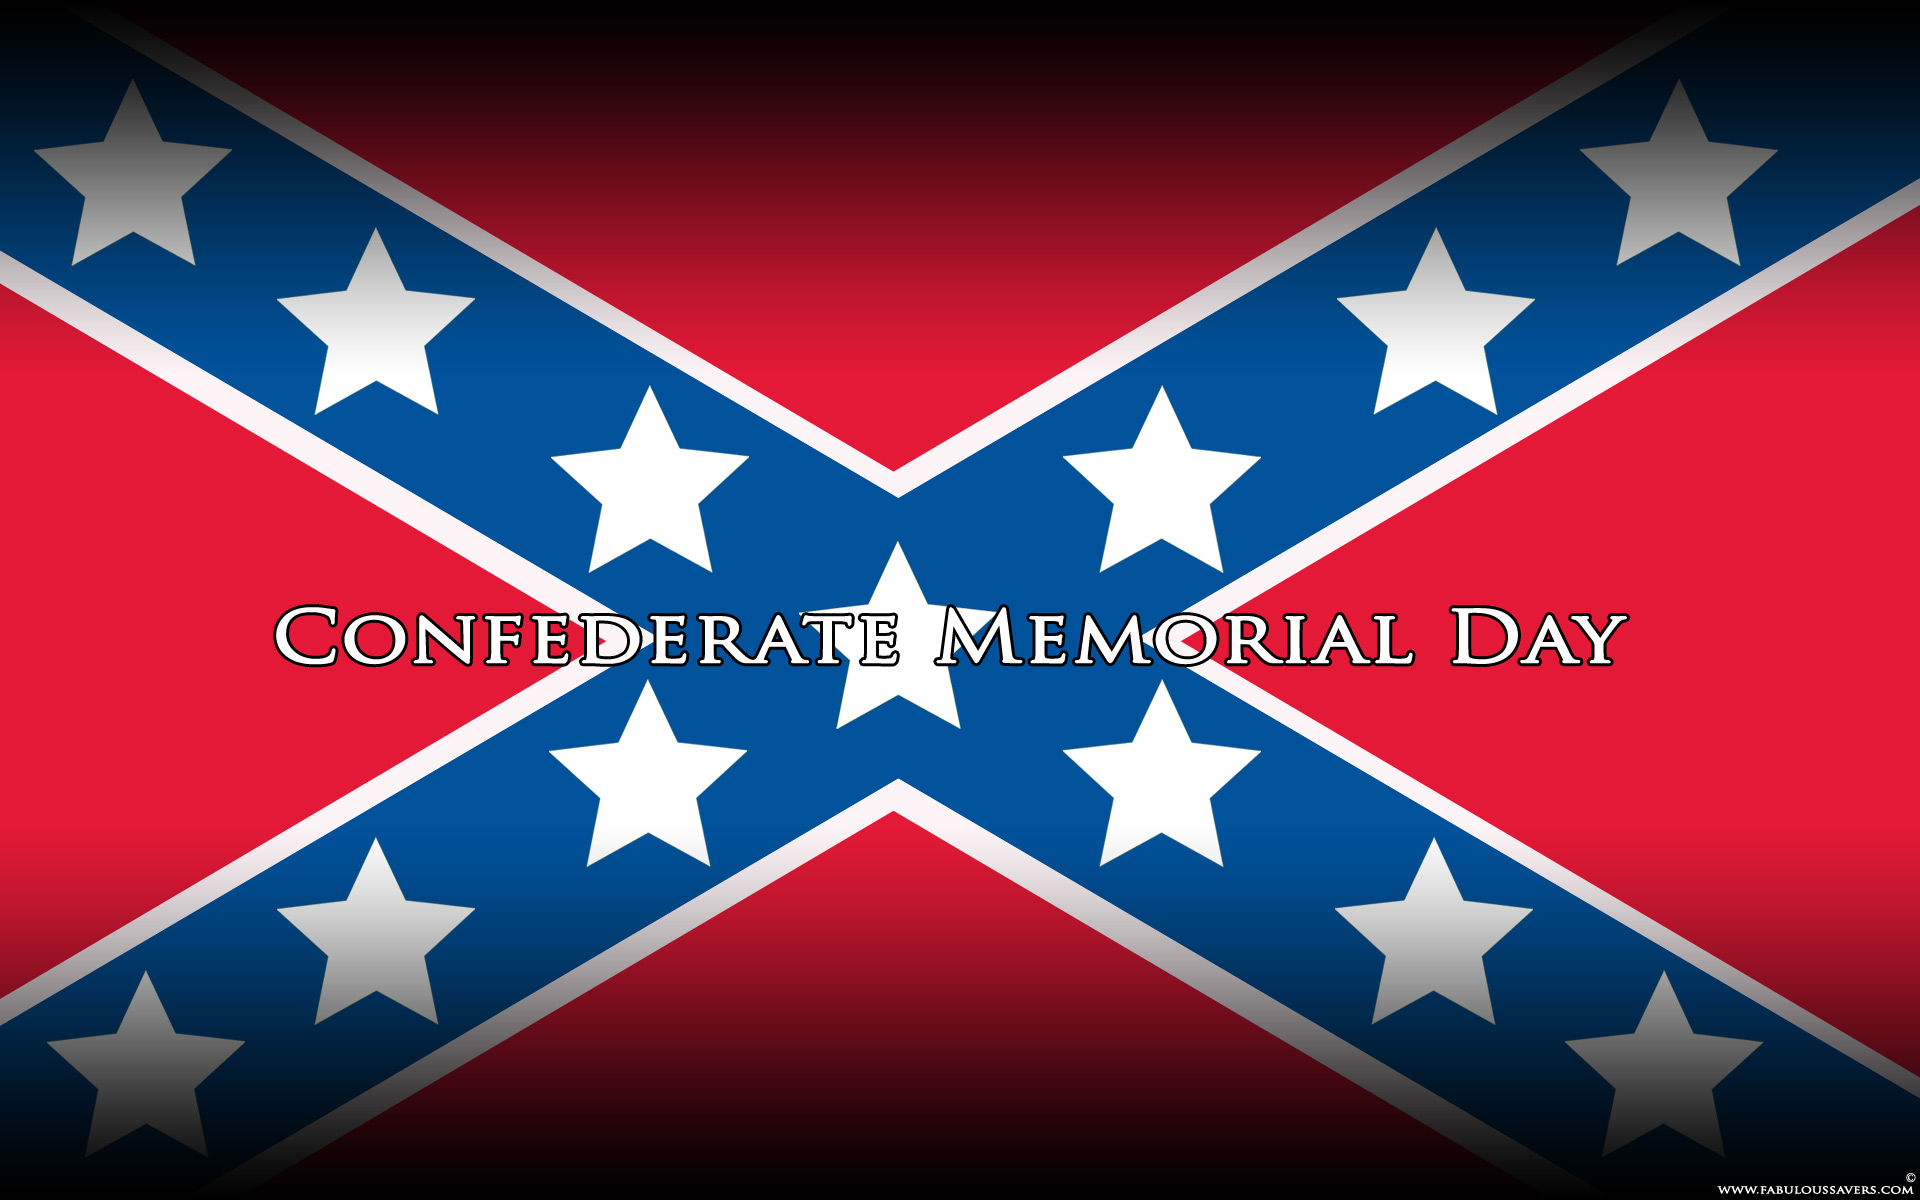 Confederate Memorial Day Puter Desktop Wallpaper Pictures